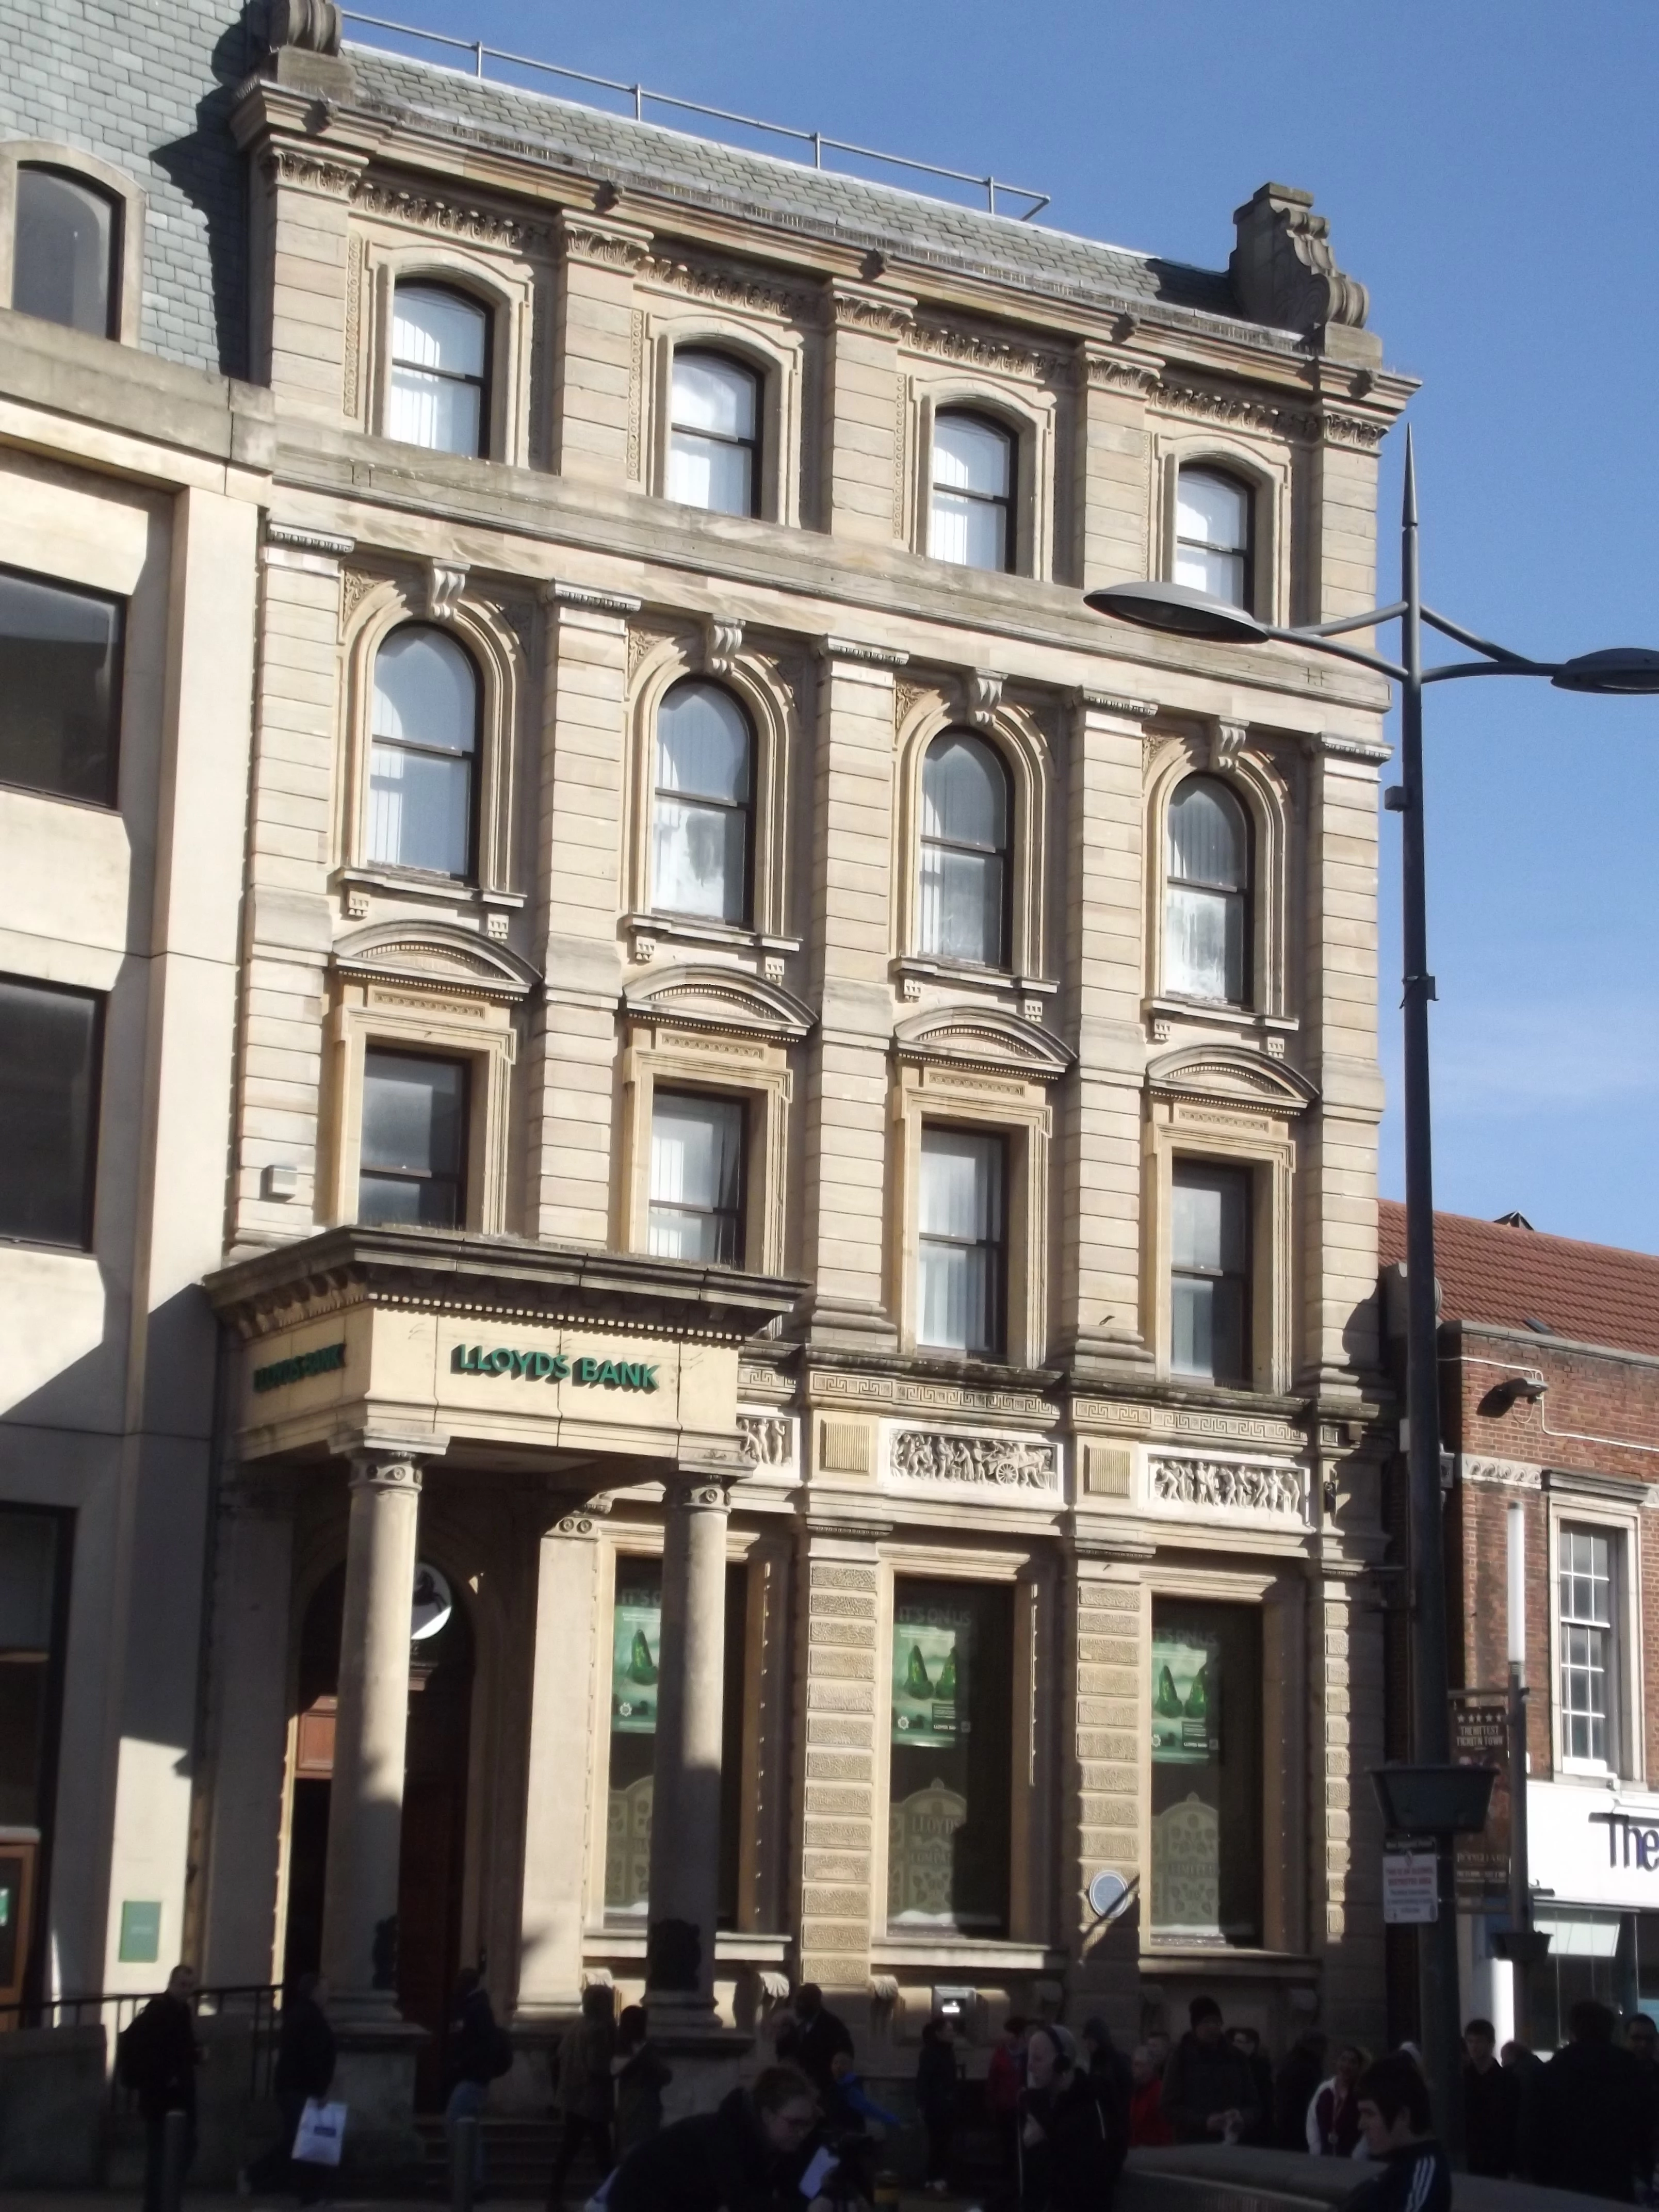 Lloyds Bank - Dudley Street, Wolverhampton